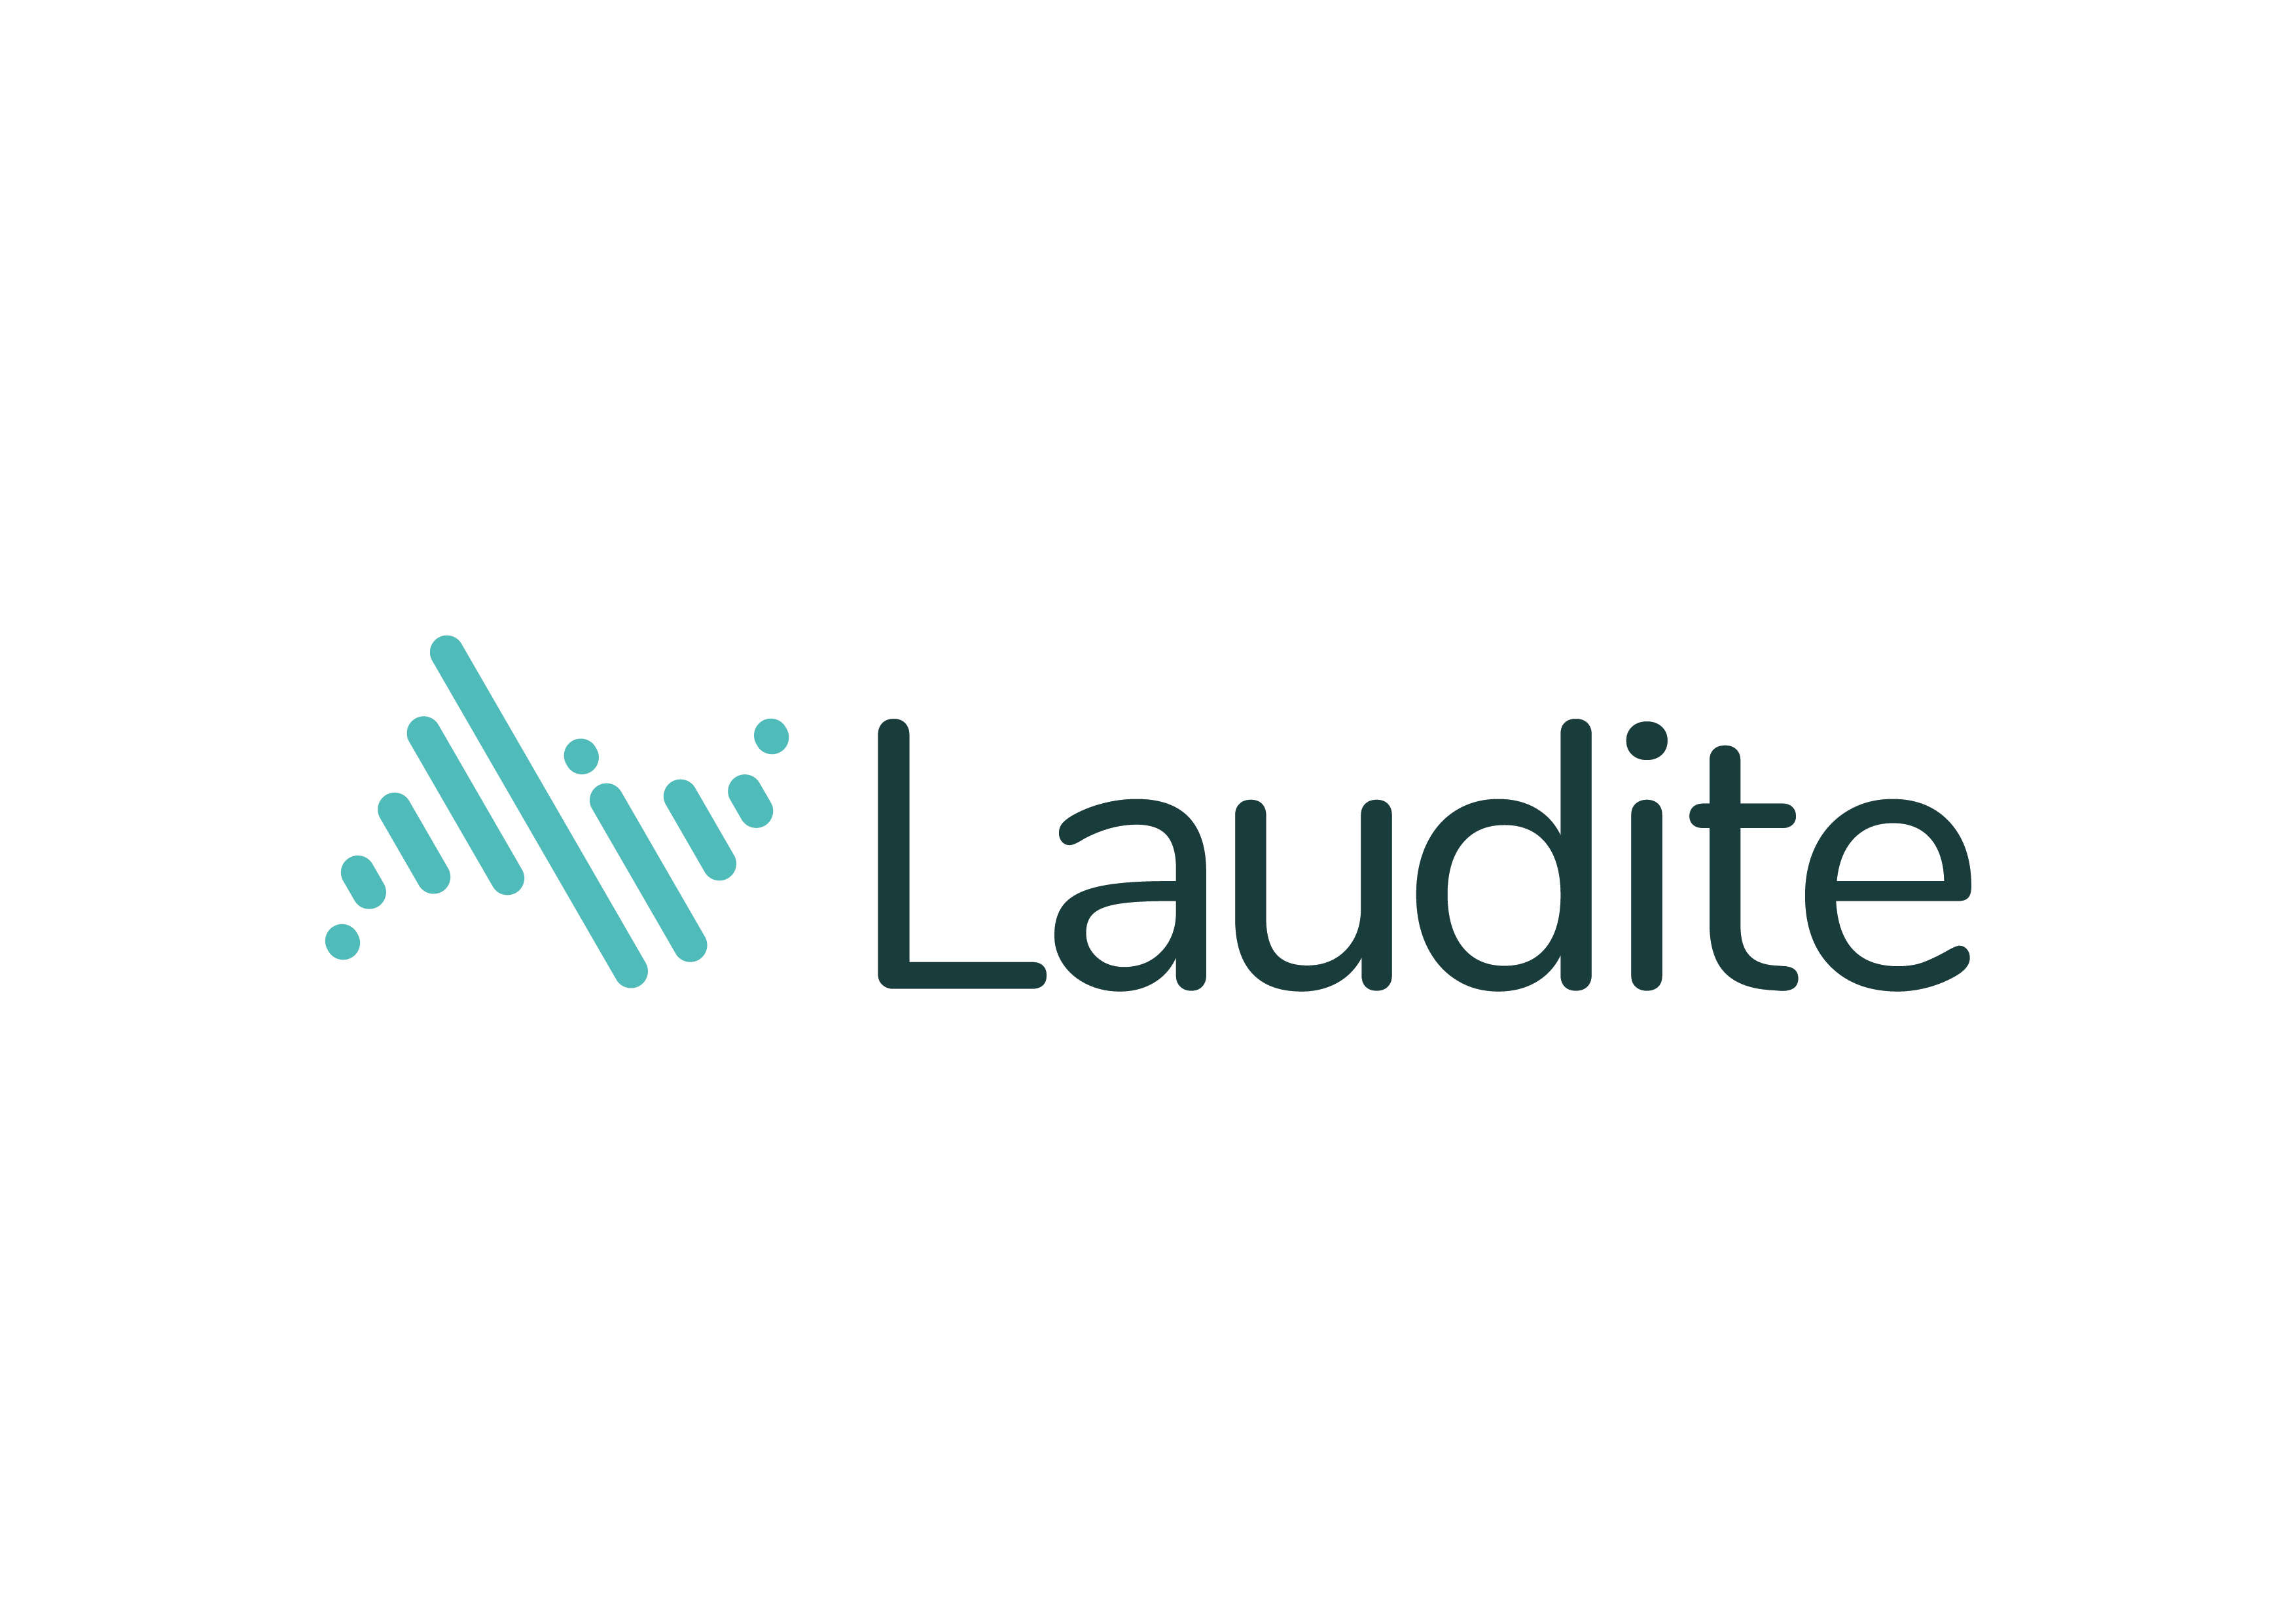 Laudite - Crunchbase Company Profile & Funding